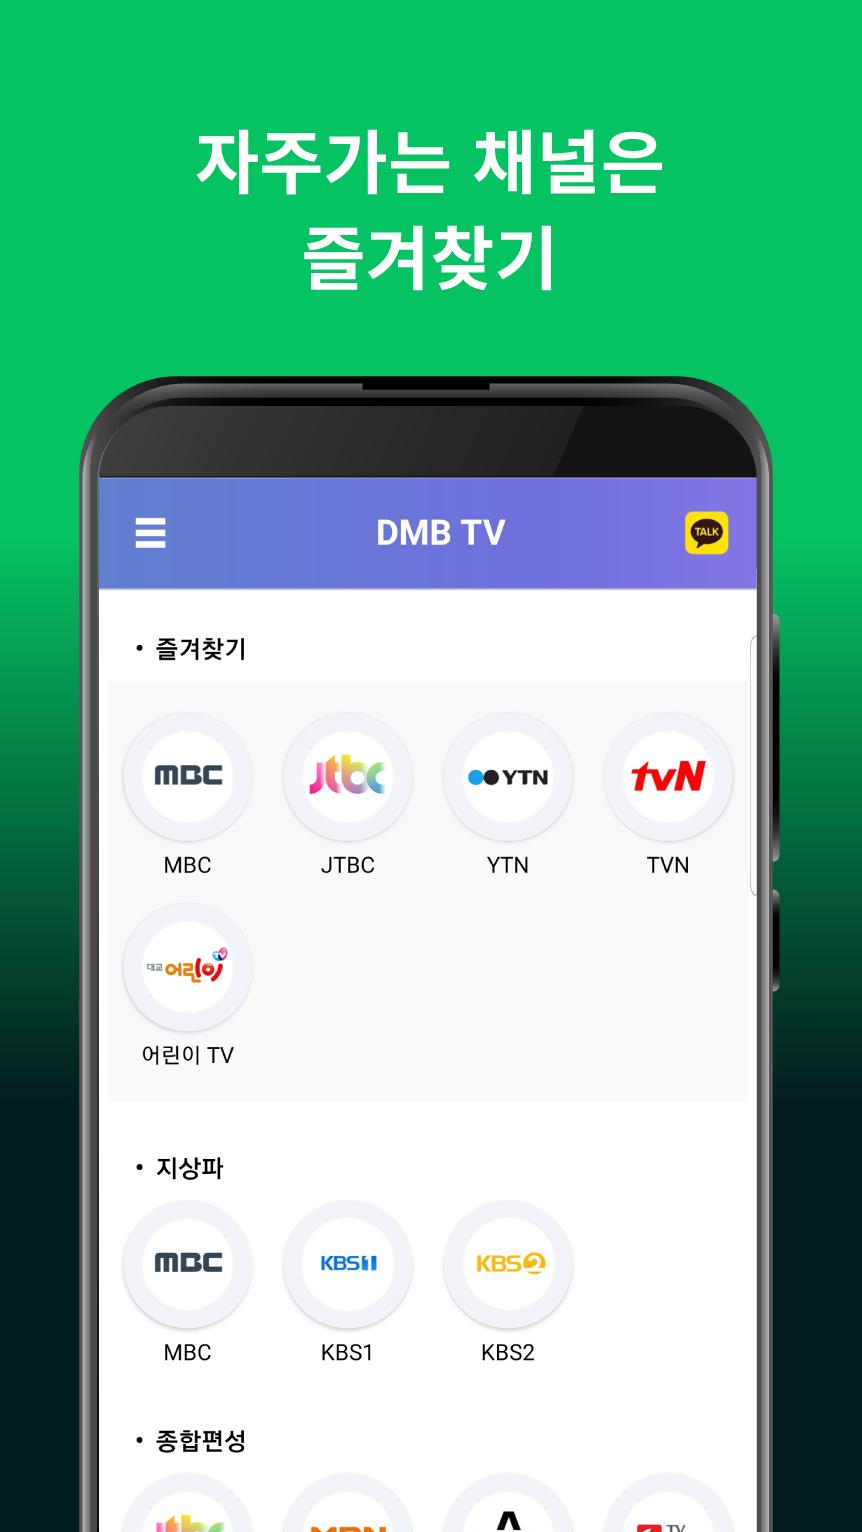 DMB TV 실시간무료TV, 실시간TV 방송, 지상파, 디엠비 방송시청, 모바일 무료티비 1.0.1 Screenshot 13